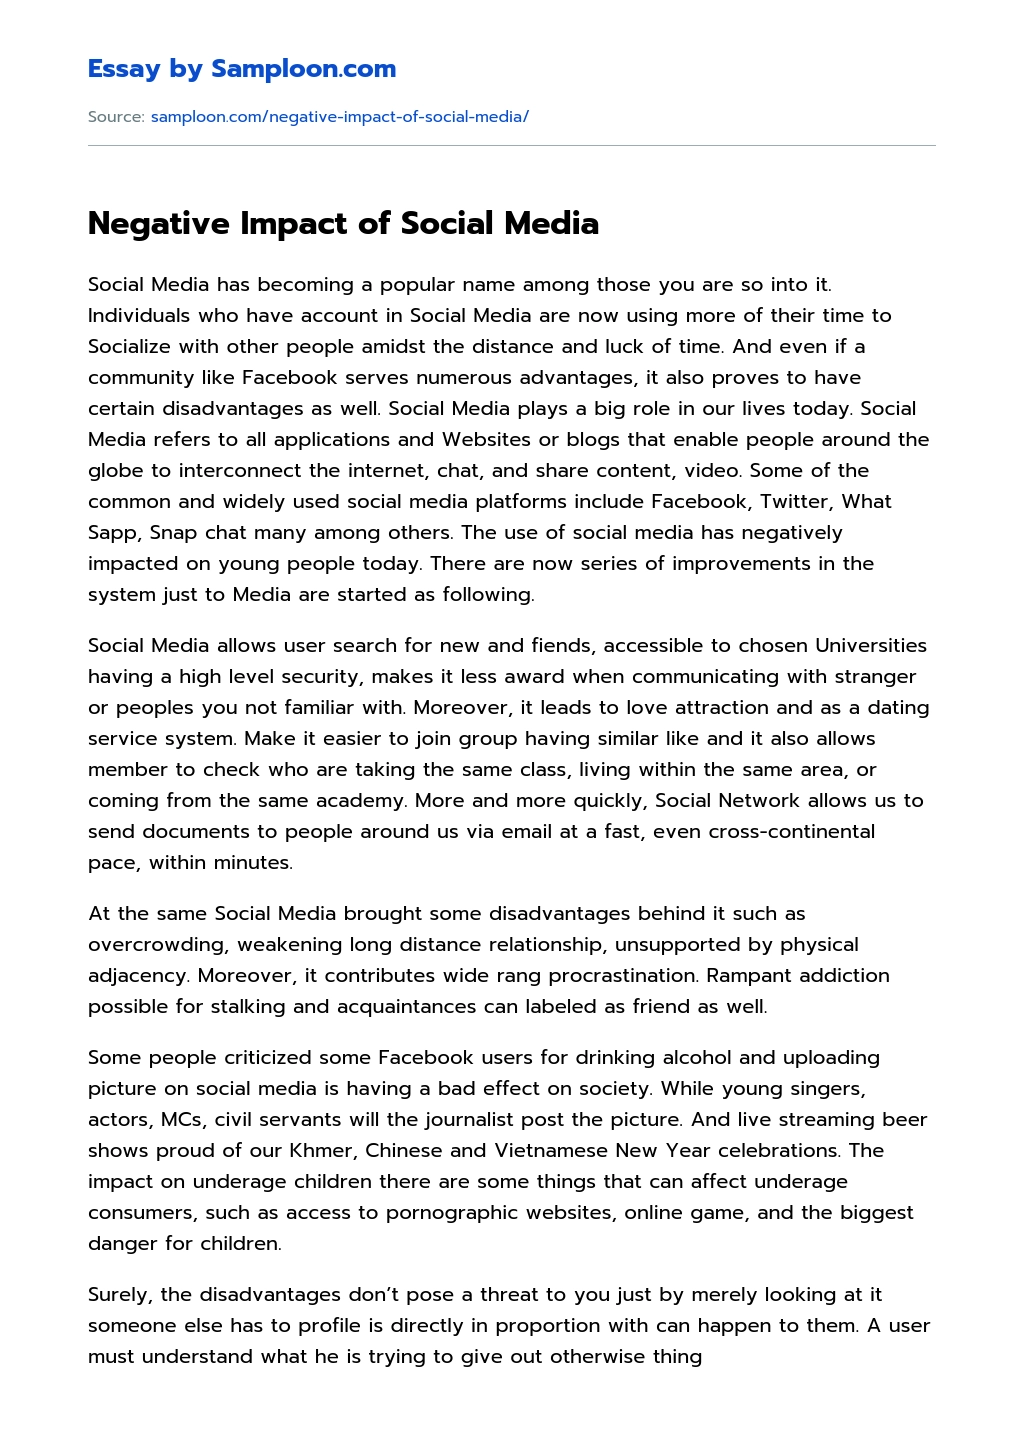 negative effects of social media on society essay